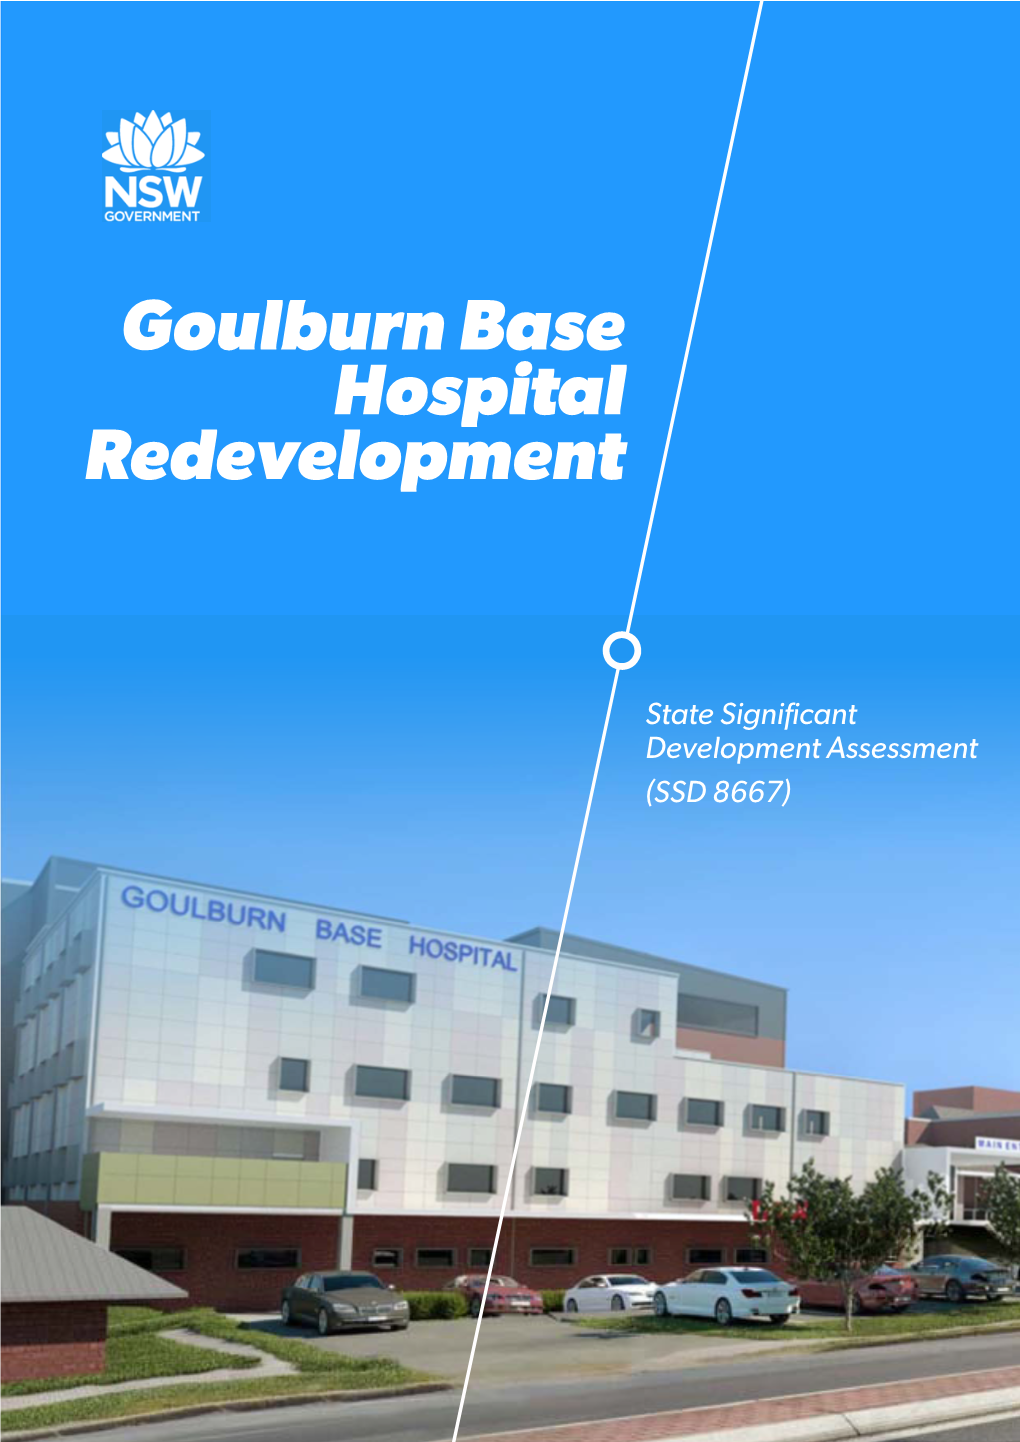 Goulburn Base Hospital Redevelopment, State Significant Development Assessment (SSD 8667), Dated November 2018